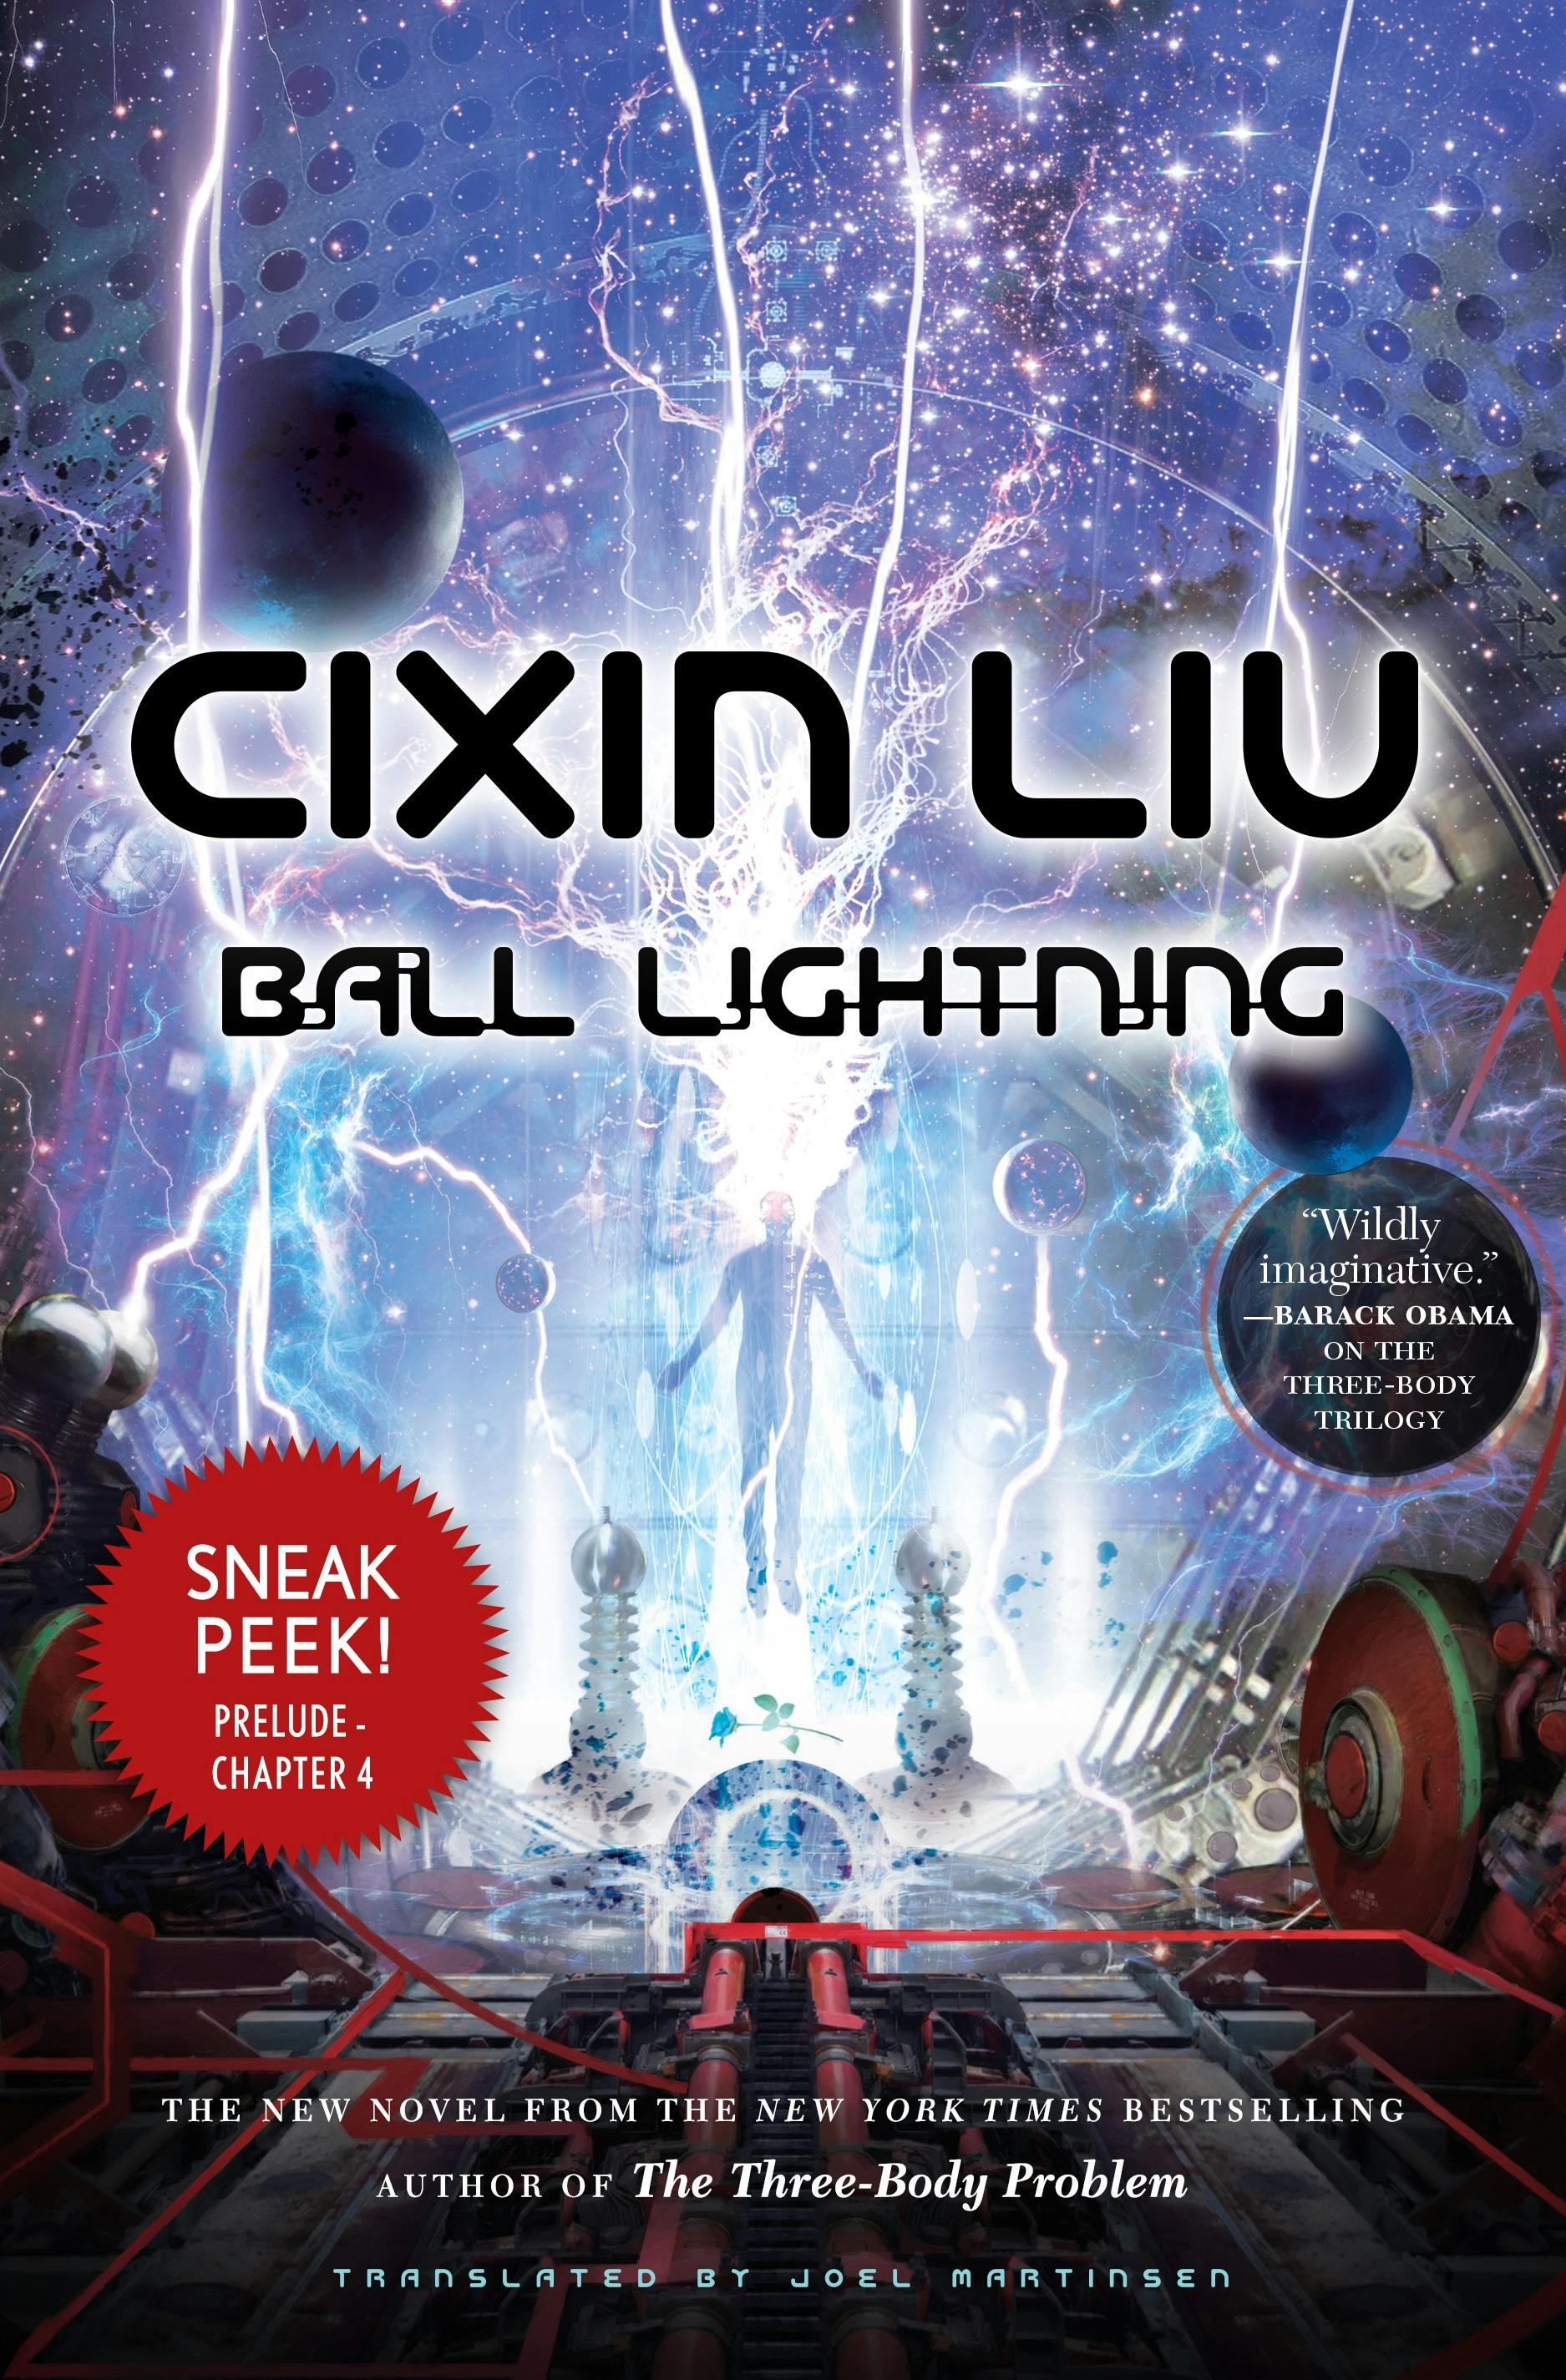 Cover for the book titled as: Ball Lightning Sneak Peek